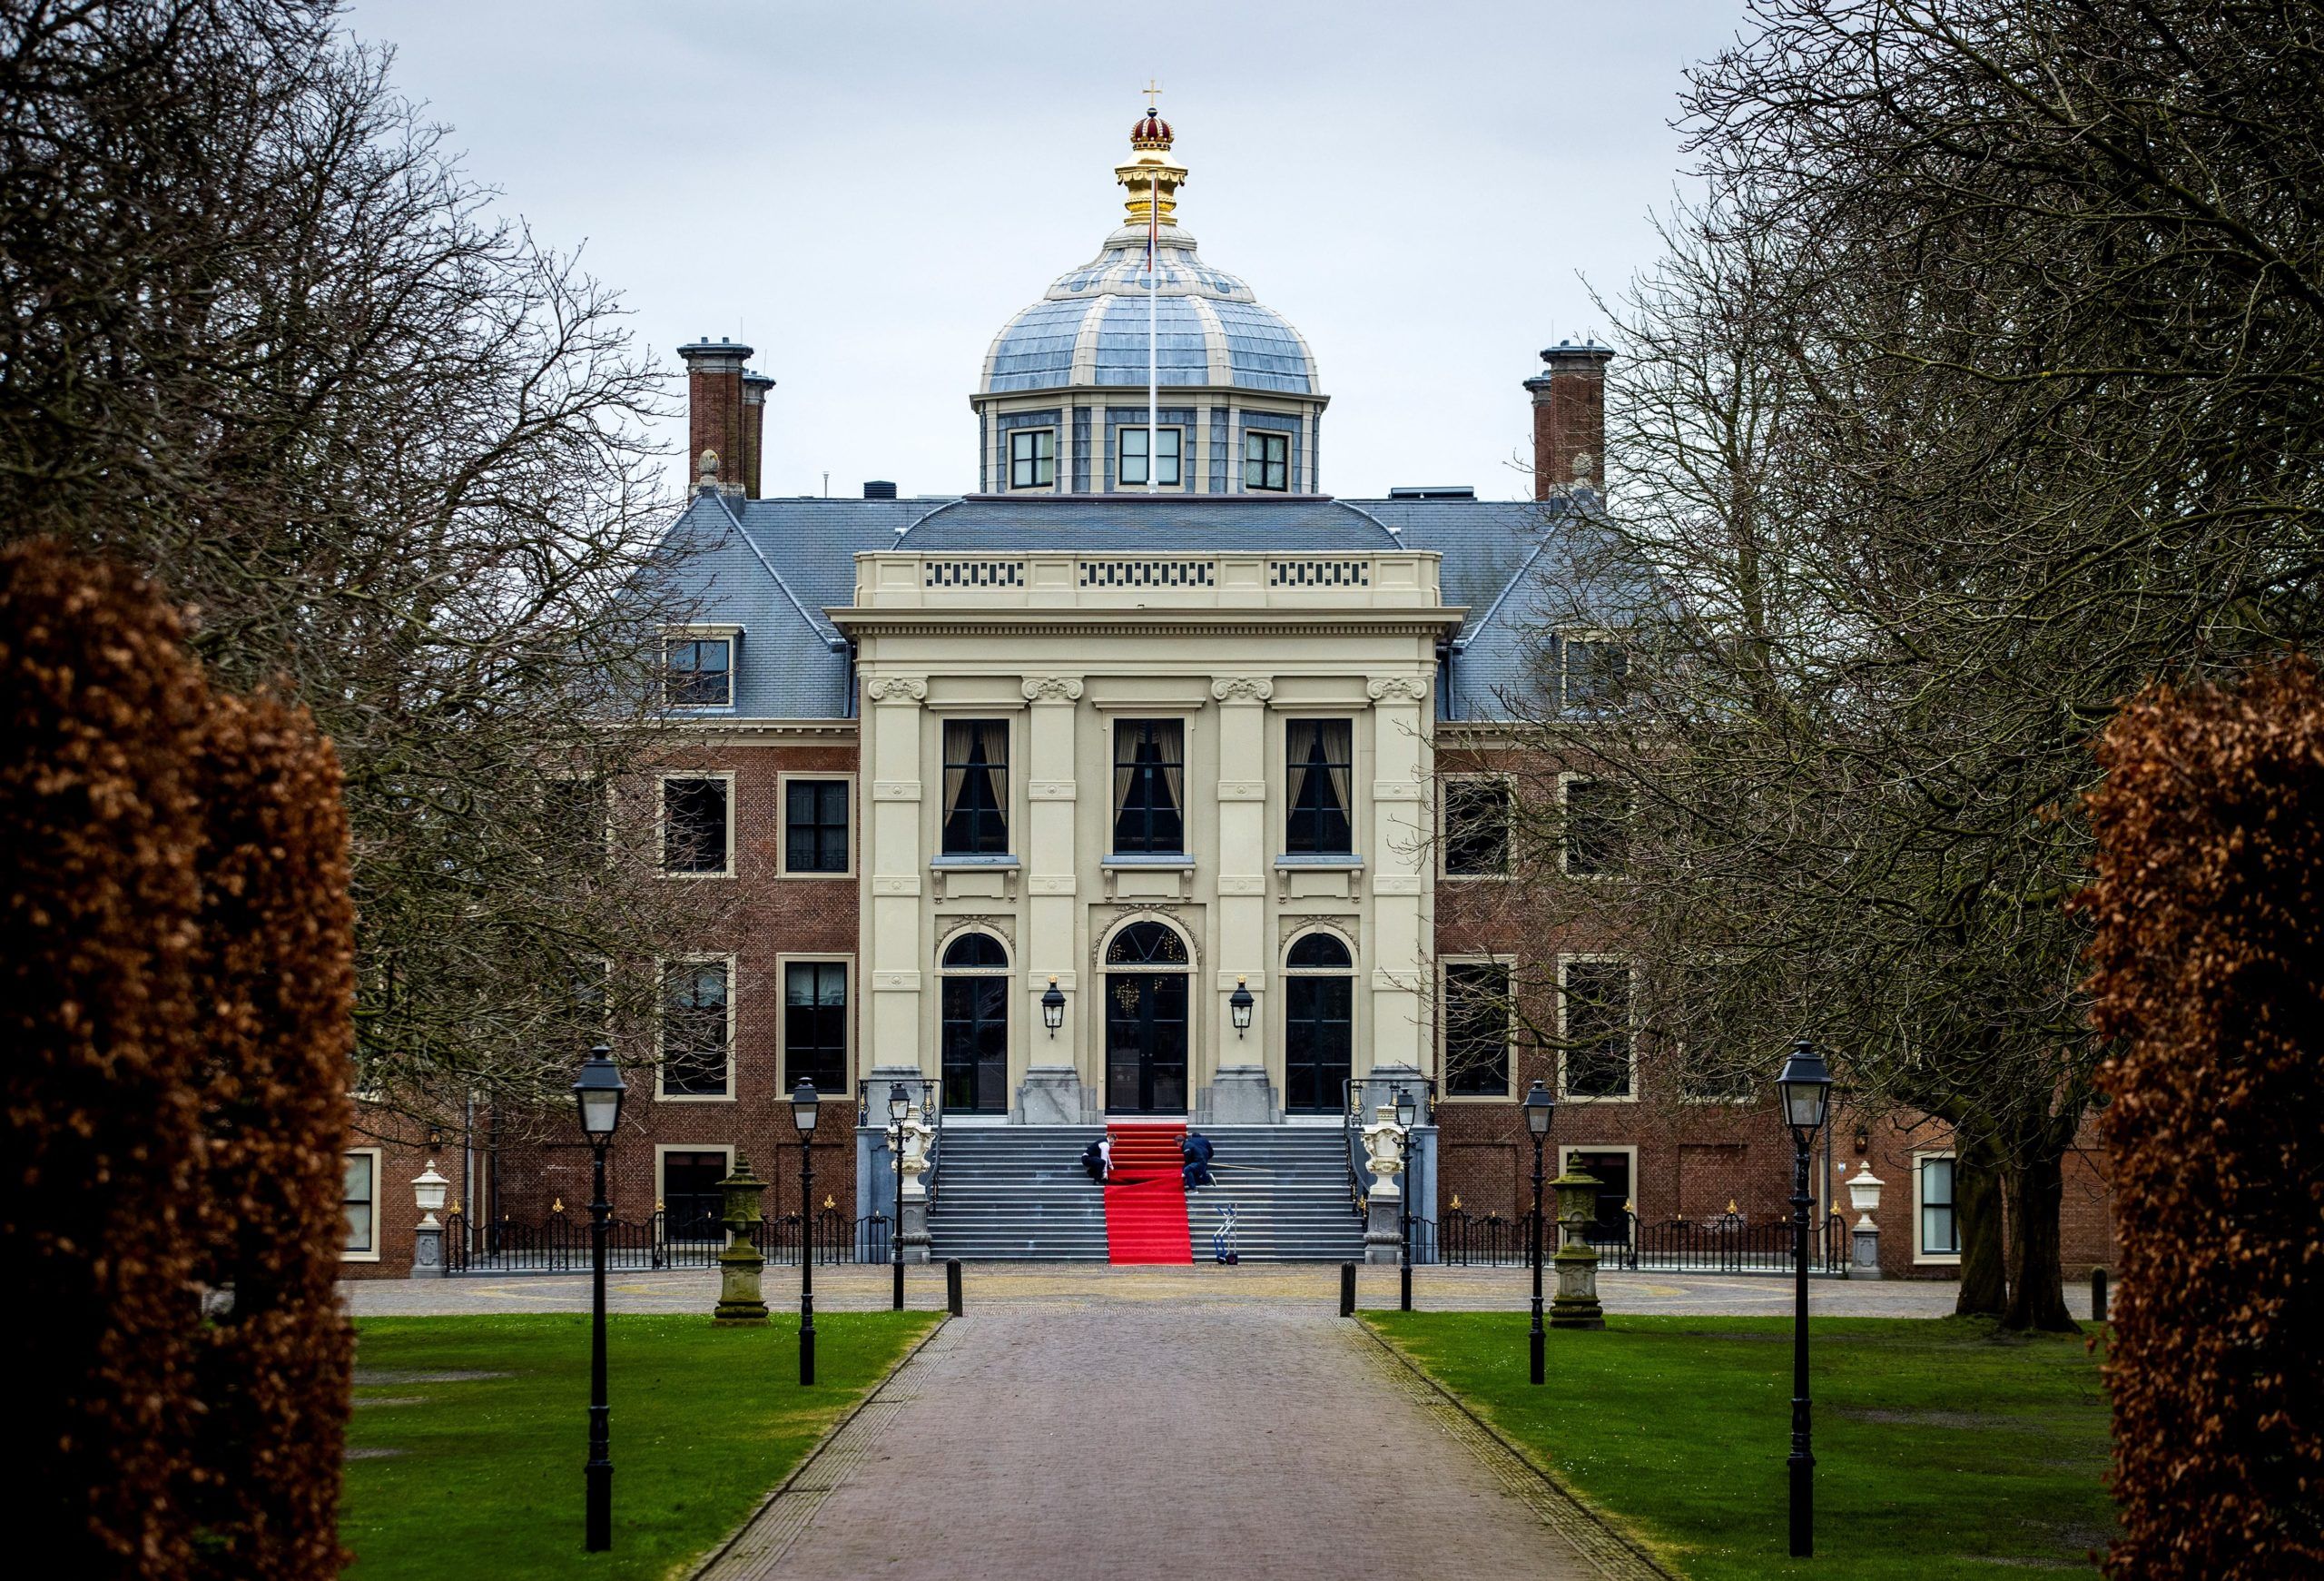 Huis ten Bosch Palace in Netherlands